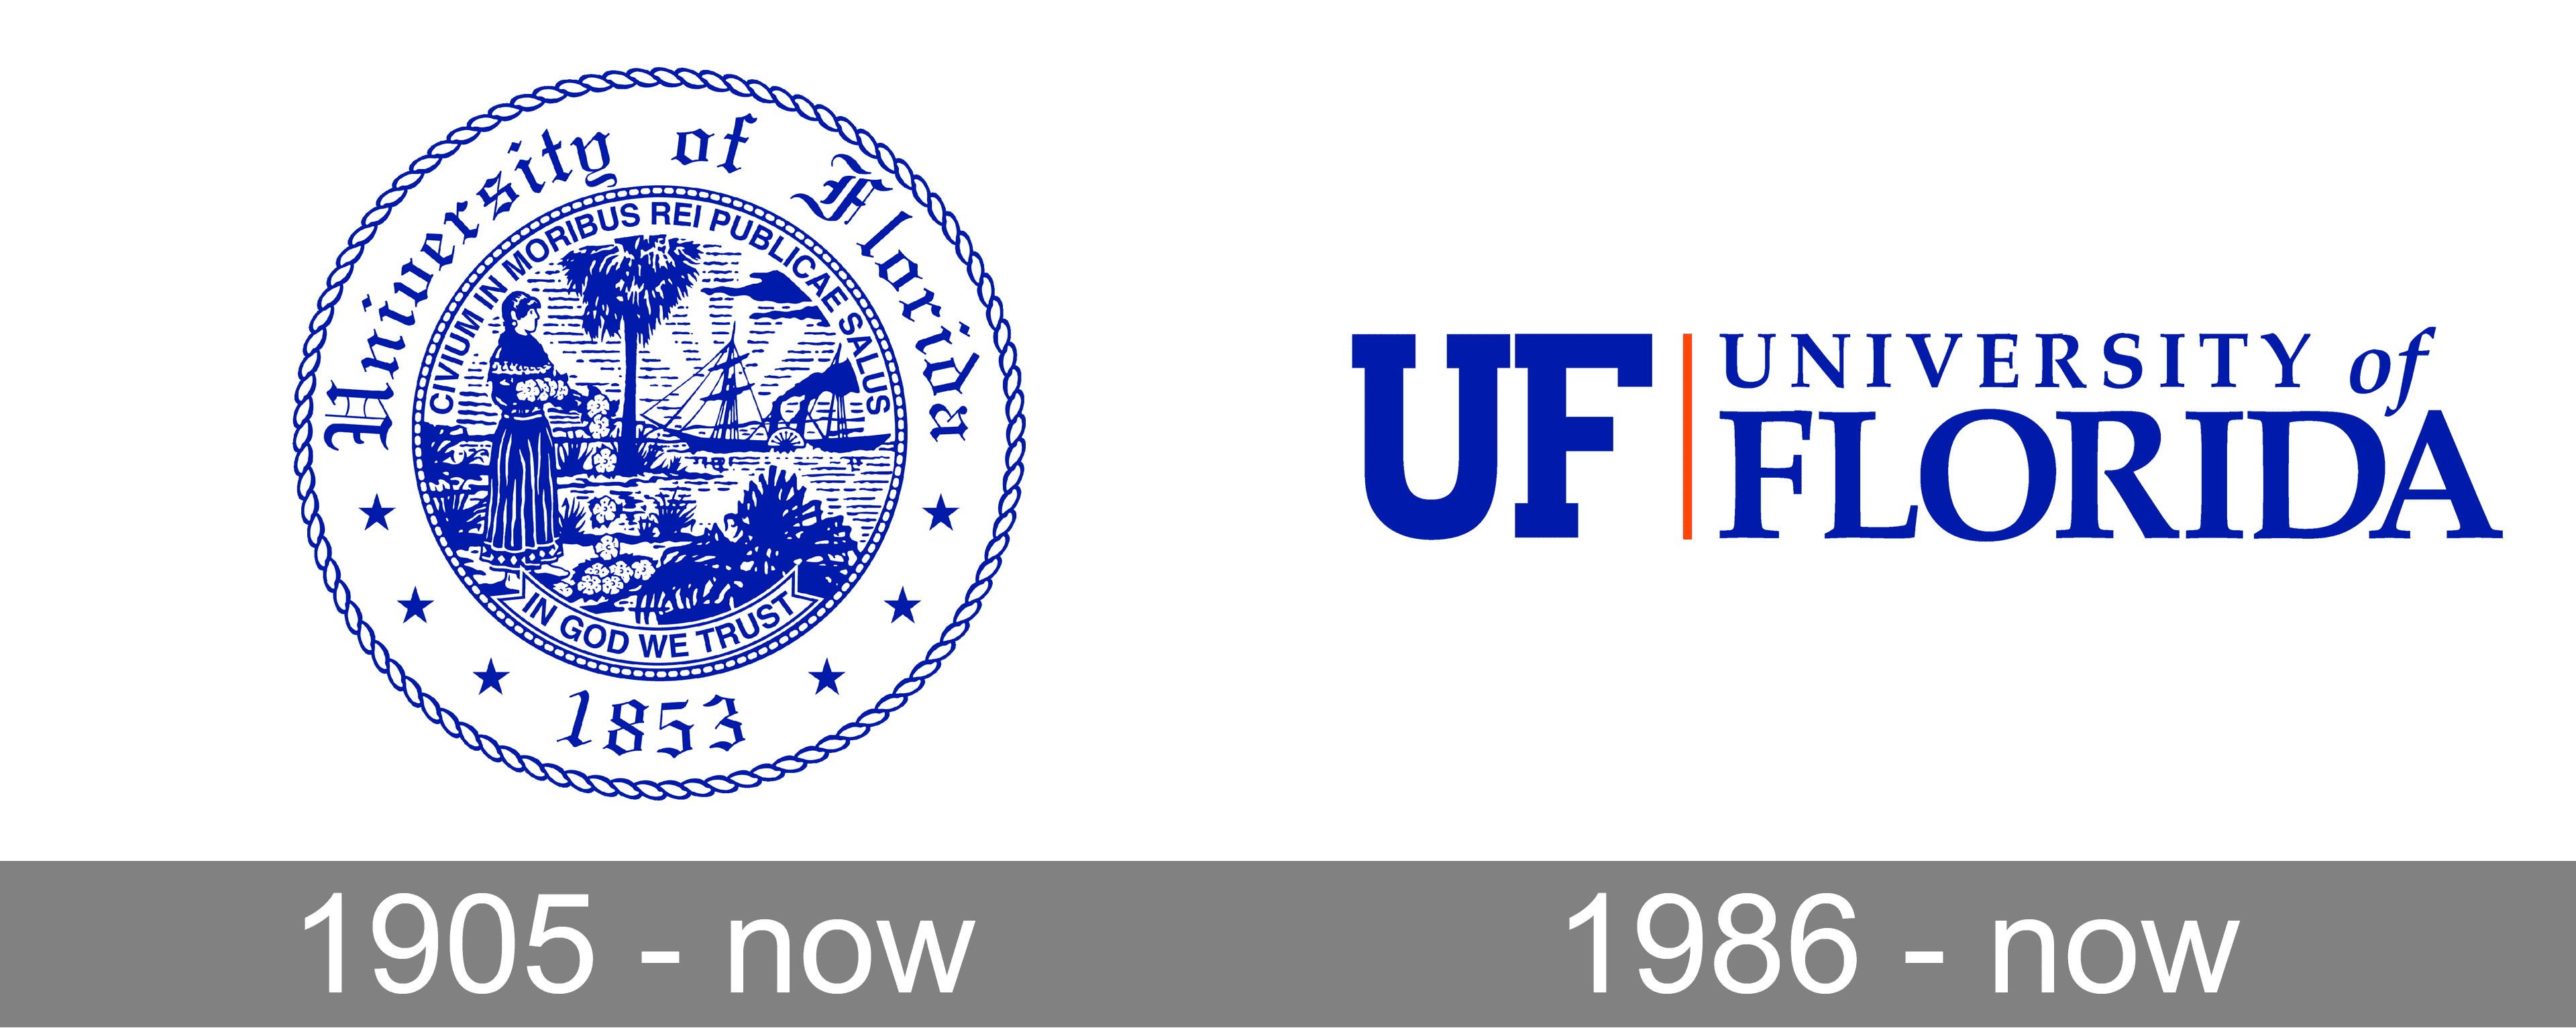 UF - Retro font and stars